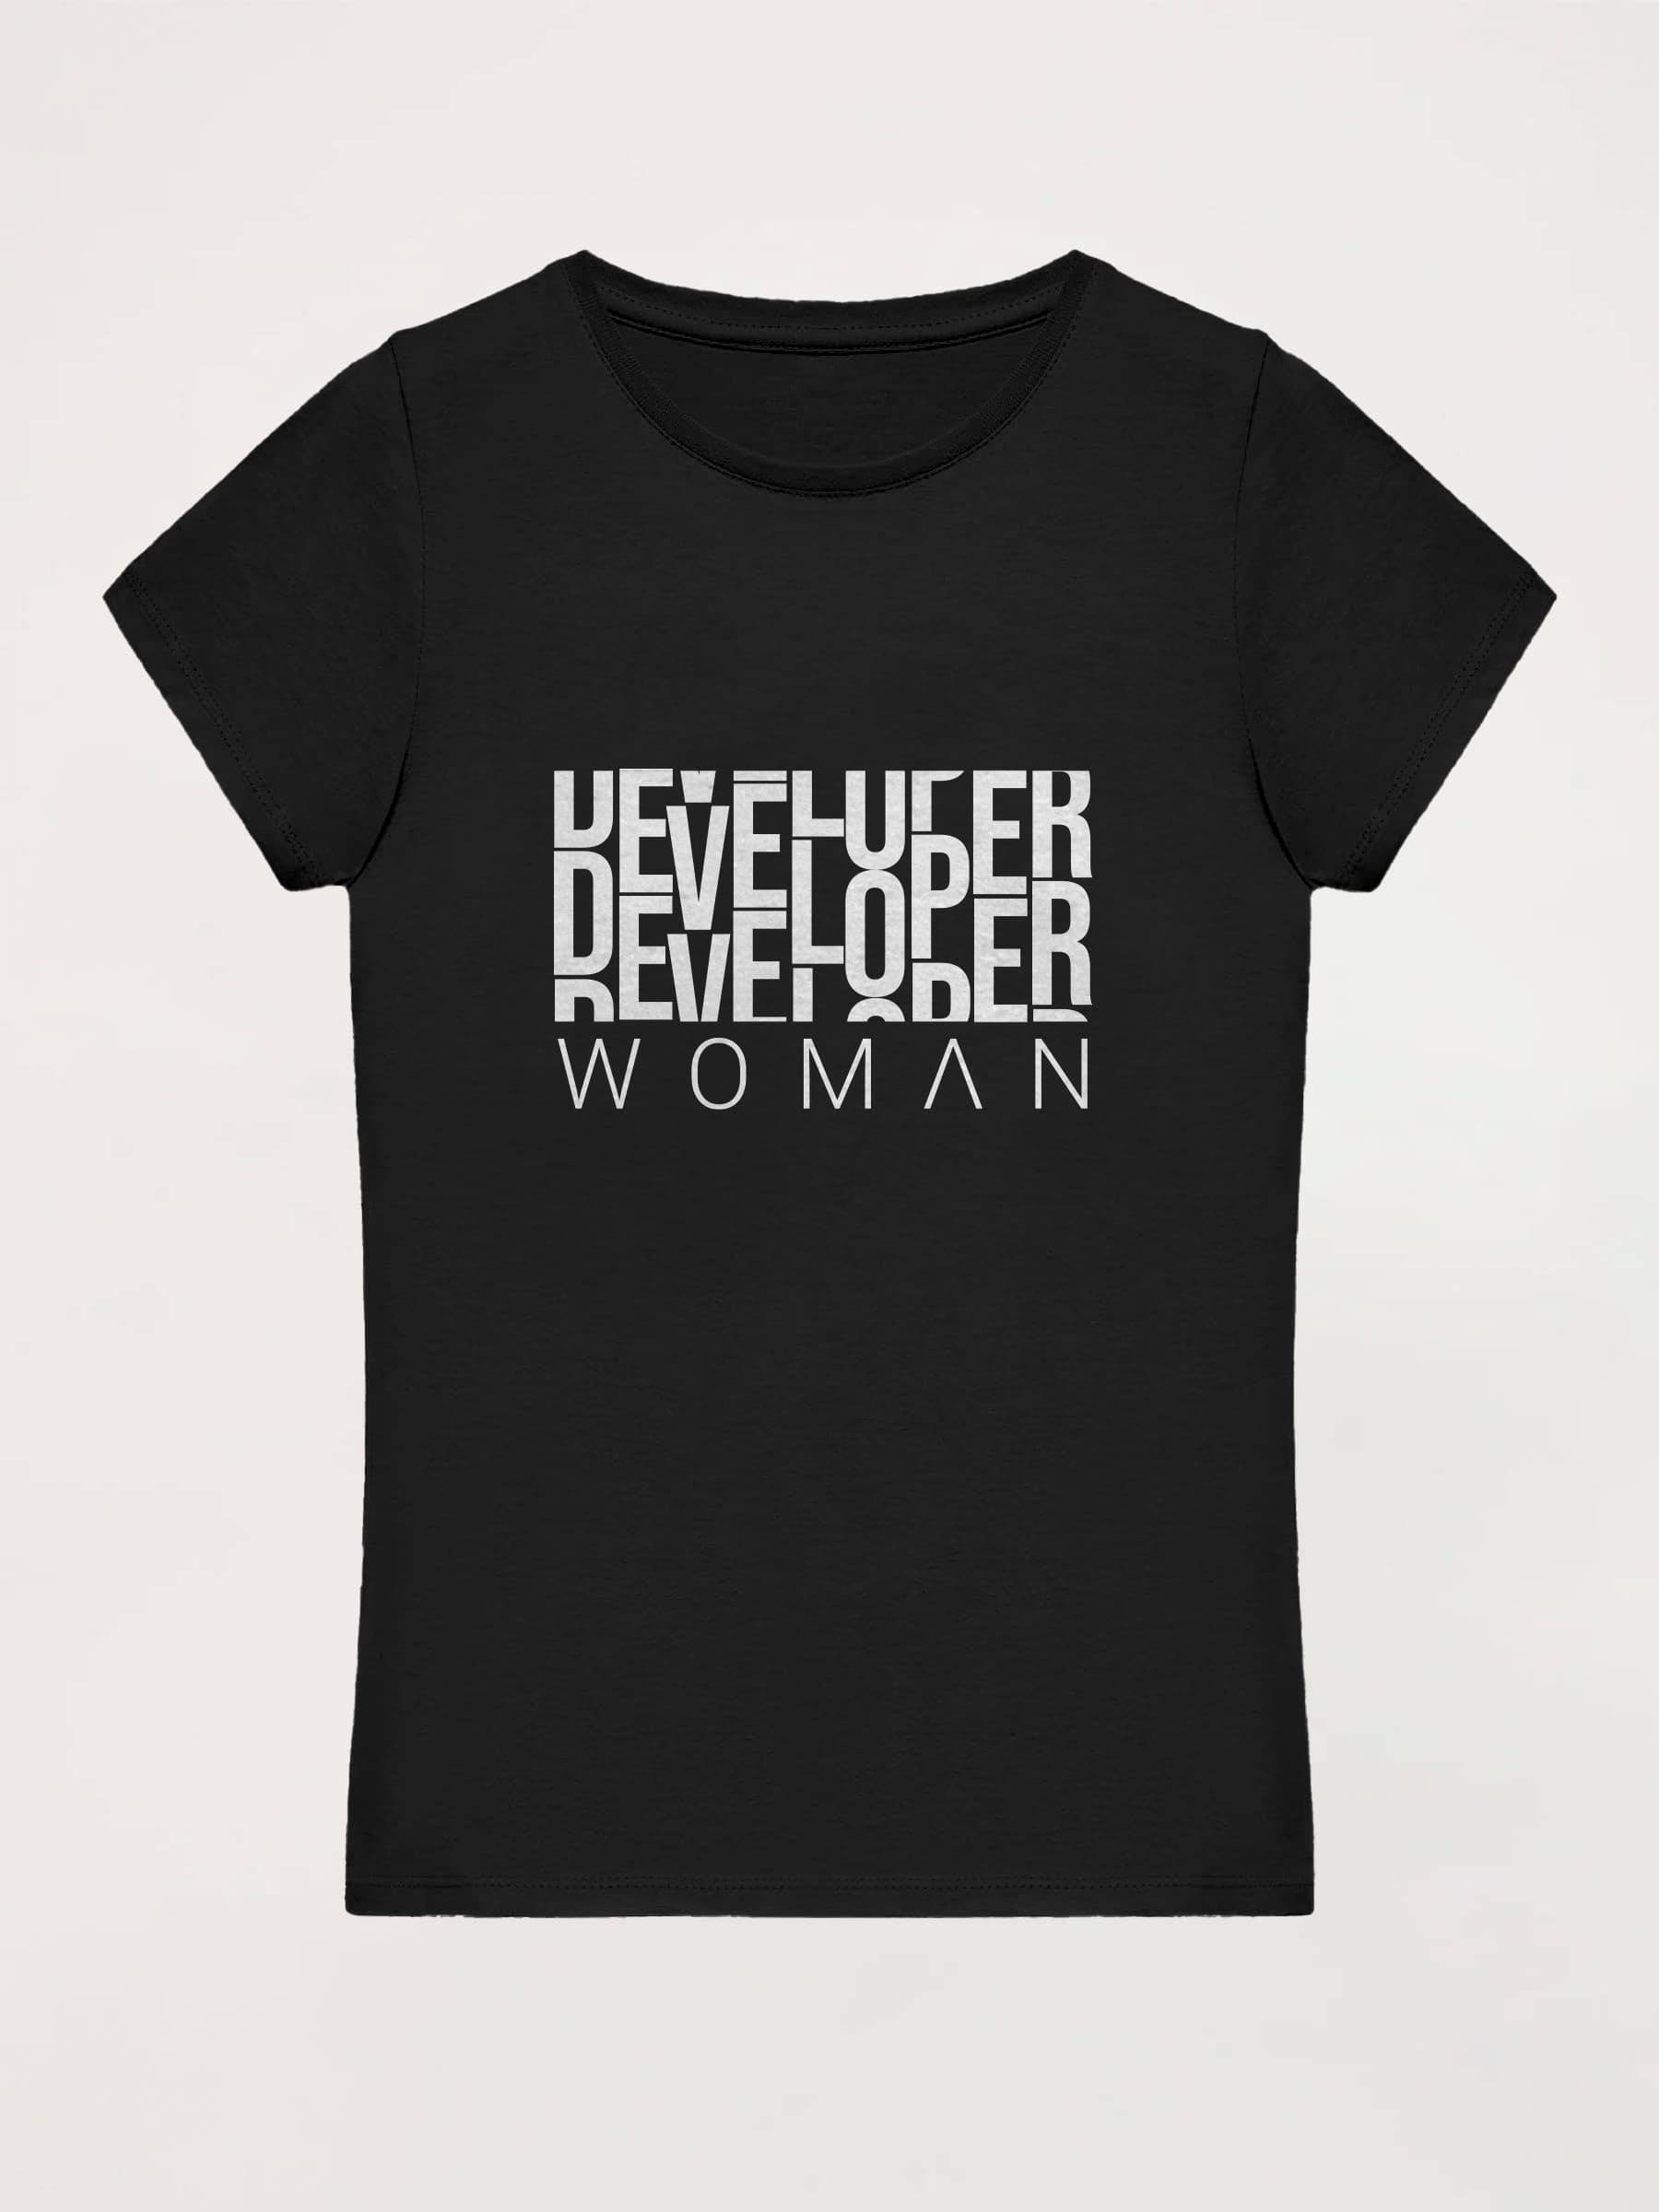 Camiseta mujer Developer Woman